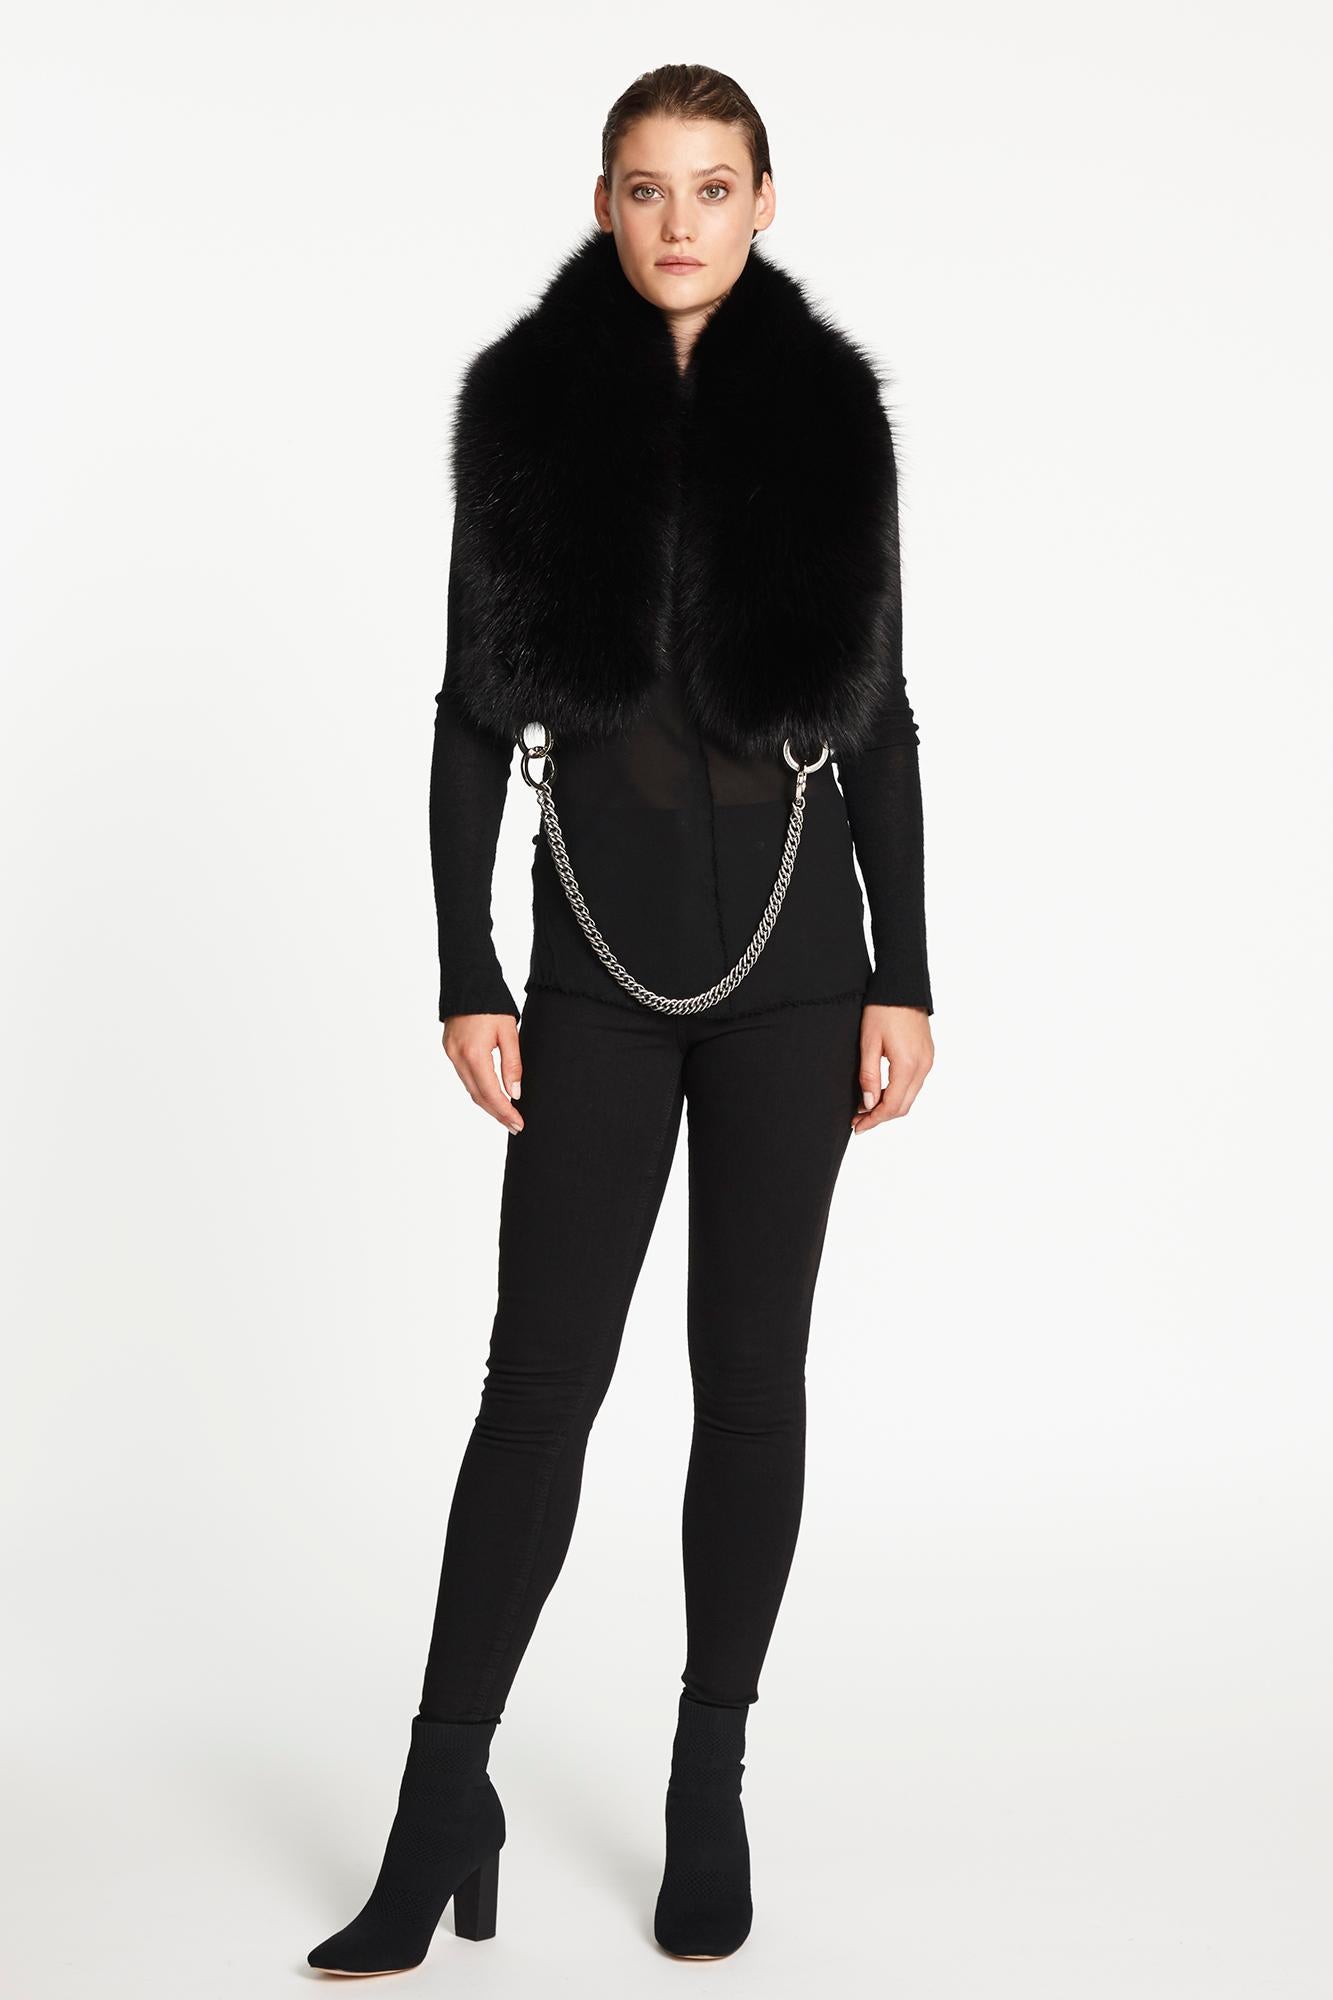 Verheyen London Chained Stole in Black Fox Fur & Chain - Brand New 1